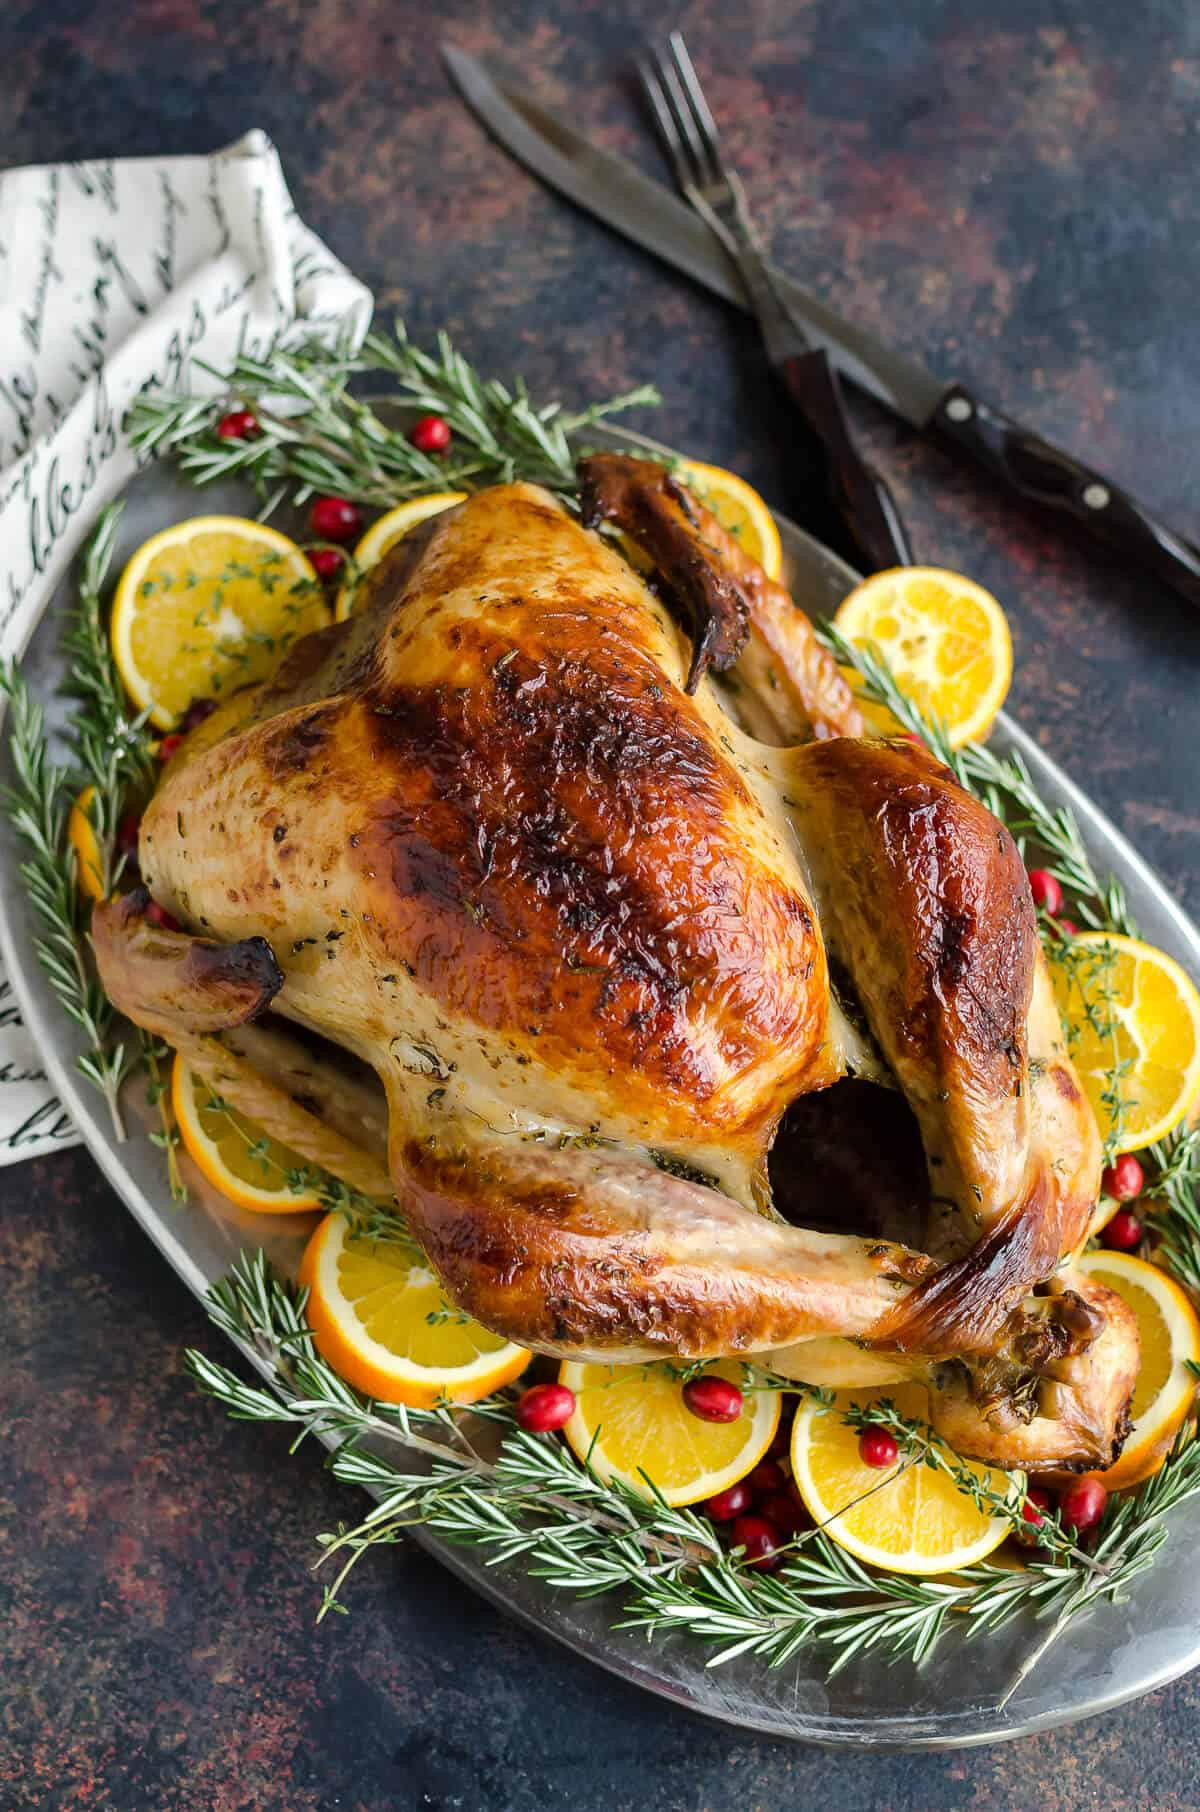 Best Thanksgiving Turkey Recipe
 The Best Roast Turkey Recipe